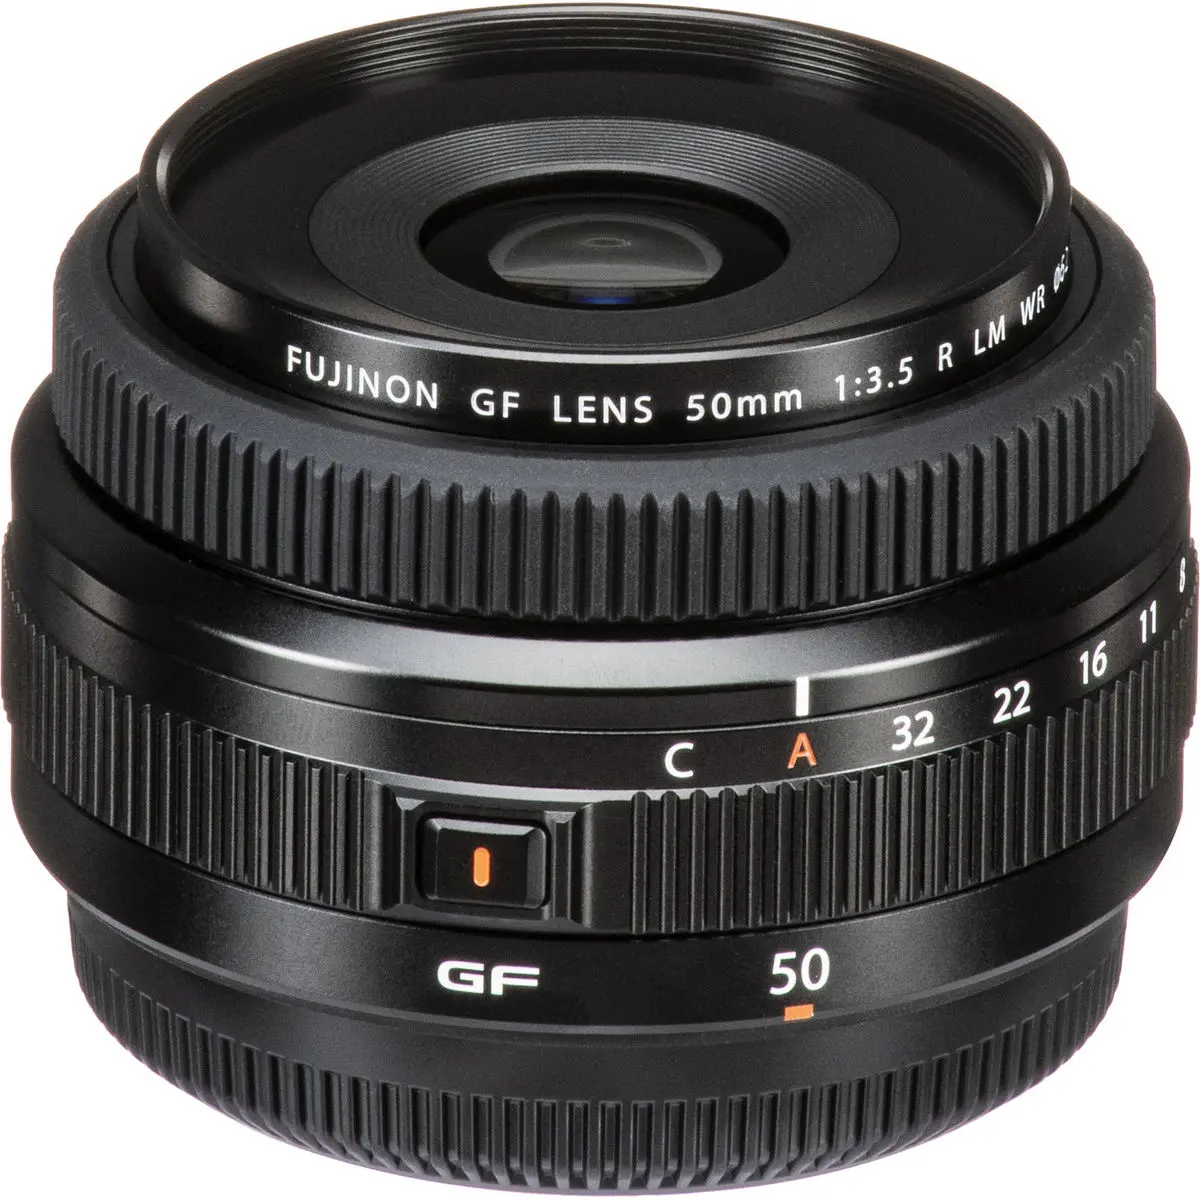 10. FUJINON GF 50mm F3.5 R LM WR Lens